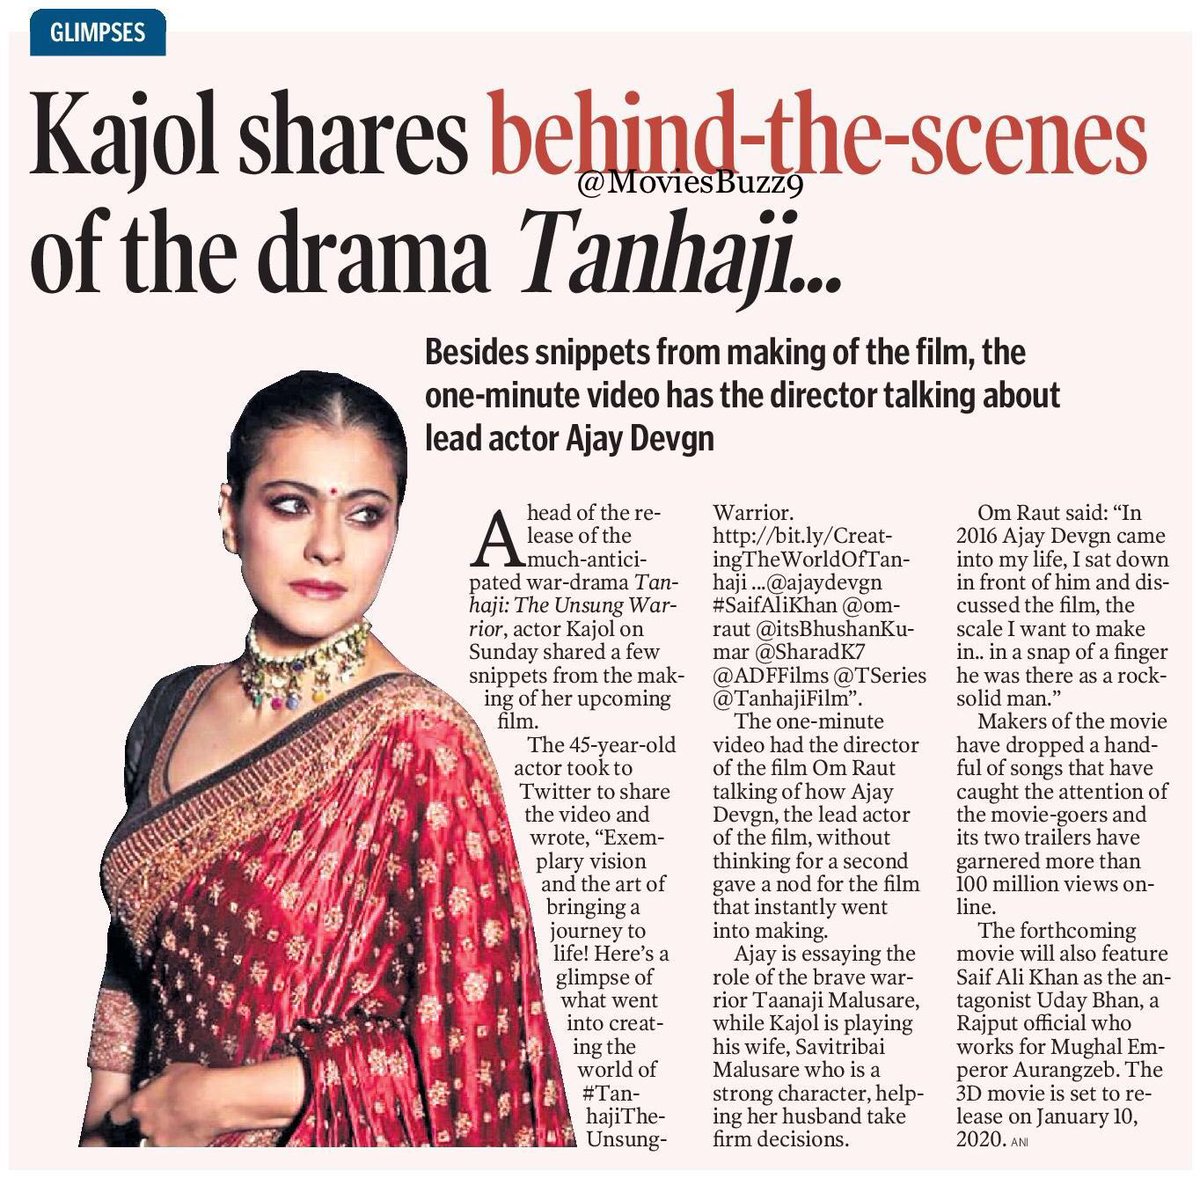 @KajolAtUN Shares Behind The Scenes Of The Drama #TanhajiTheUnsungWarrior
#Kajol 
#Tanhaji